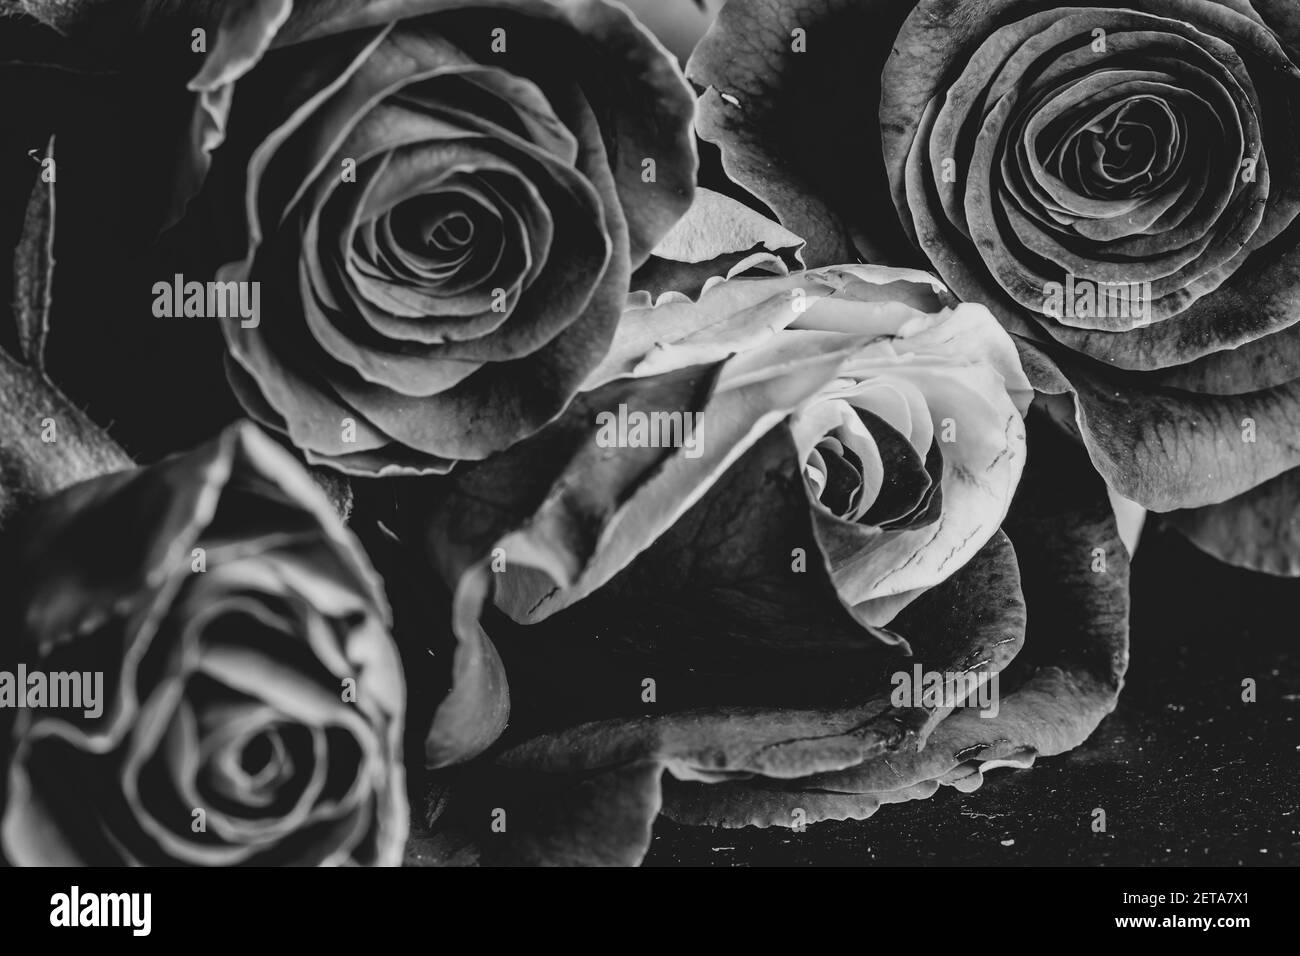 Rosas en escala de grises fotografías e imágenes de alta resolución - Alamy